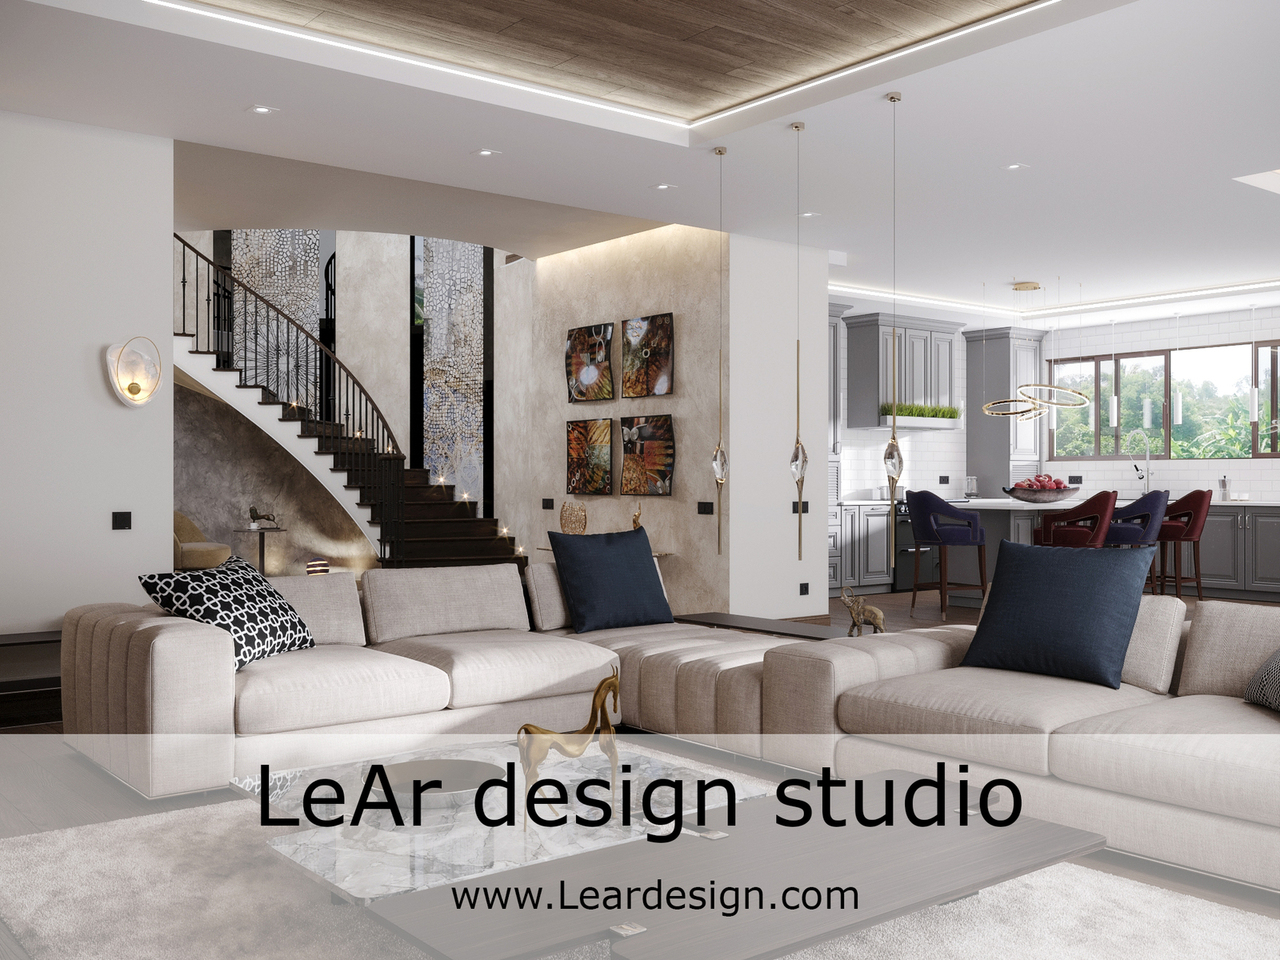 Lear design studio